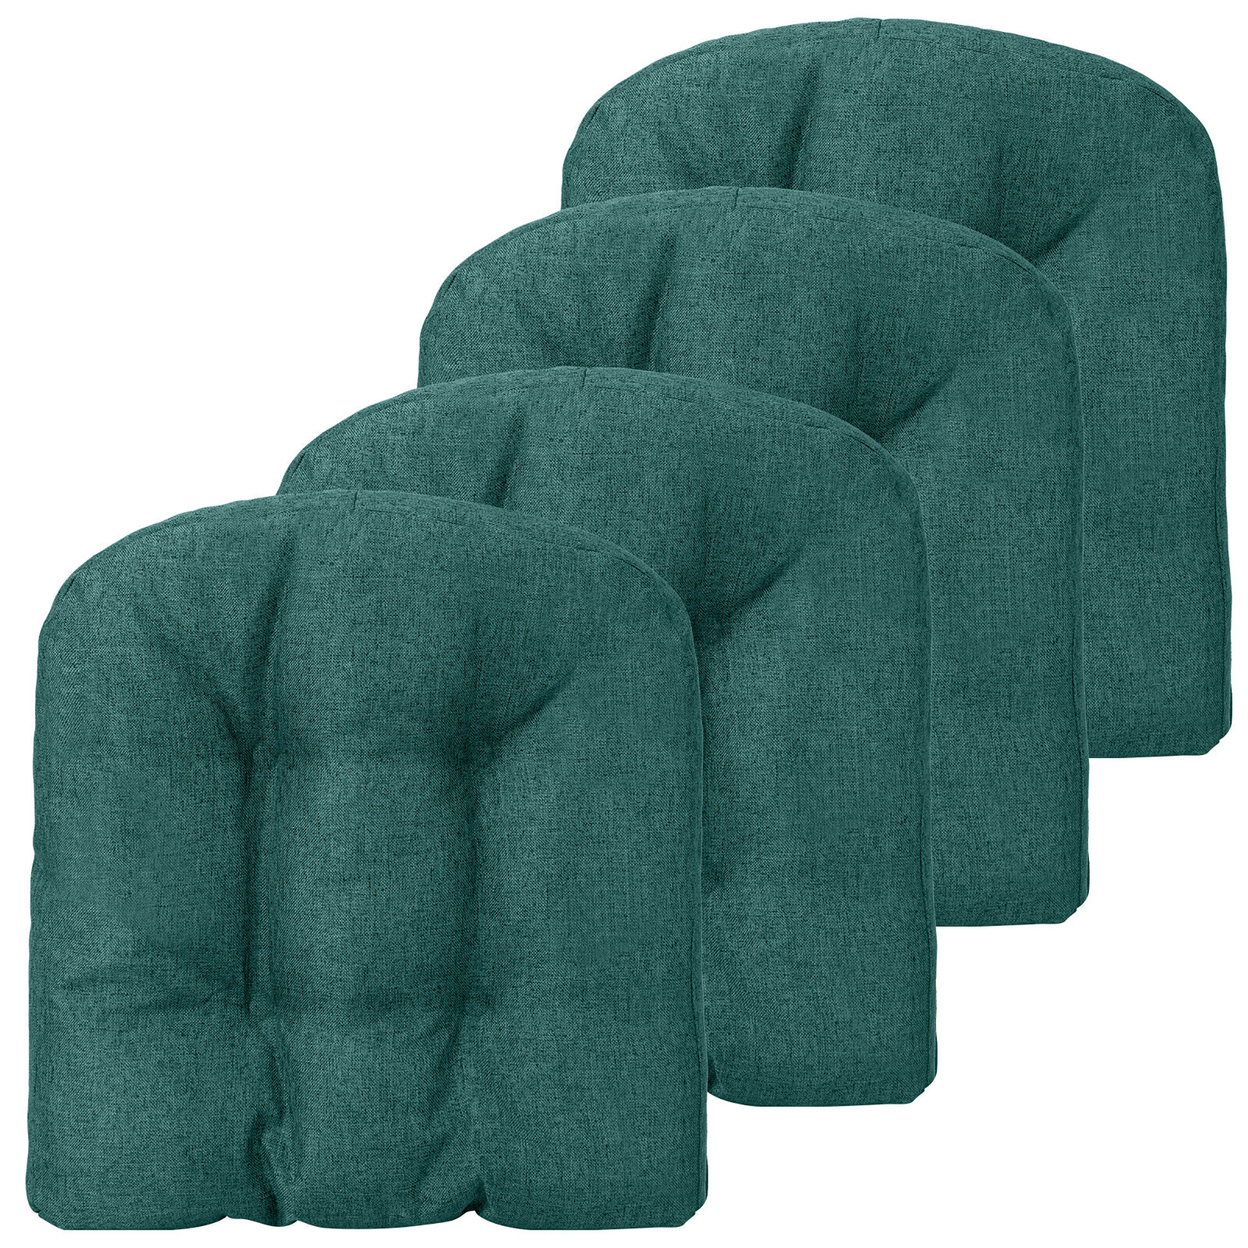 4 Pcs Patio Dining Chair Cushions U-Shaped Chair Pads Non-Slip Bottom - Green